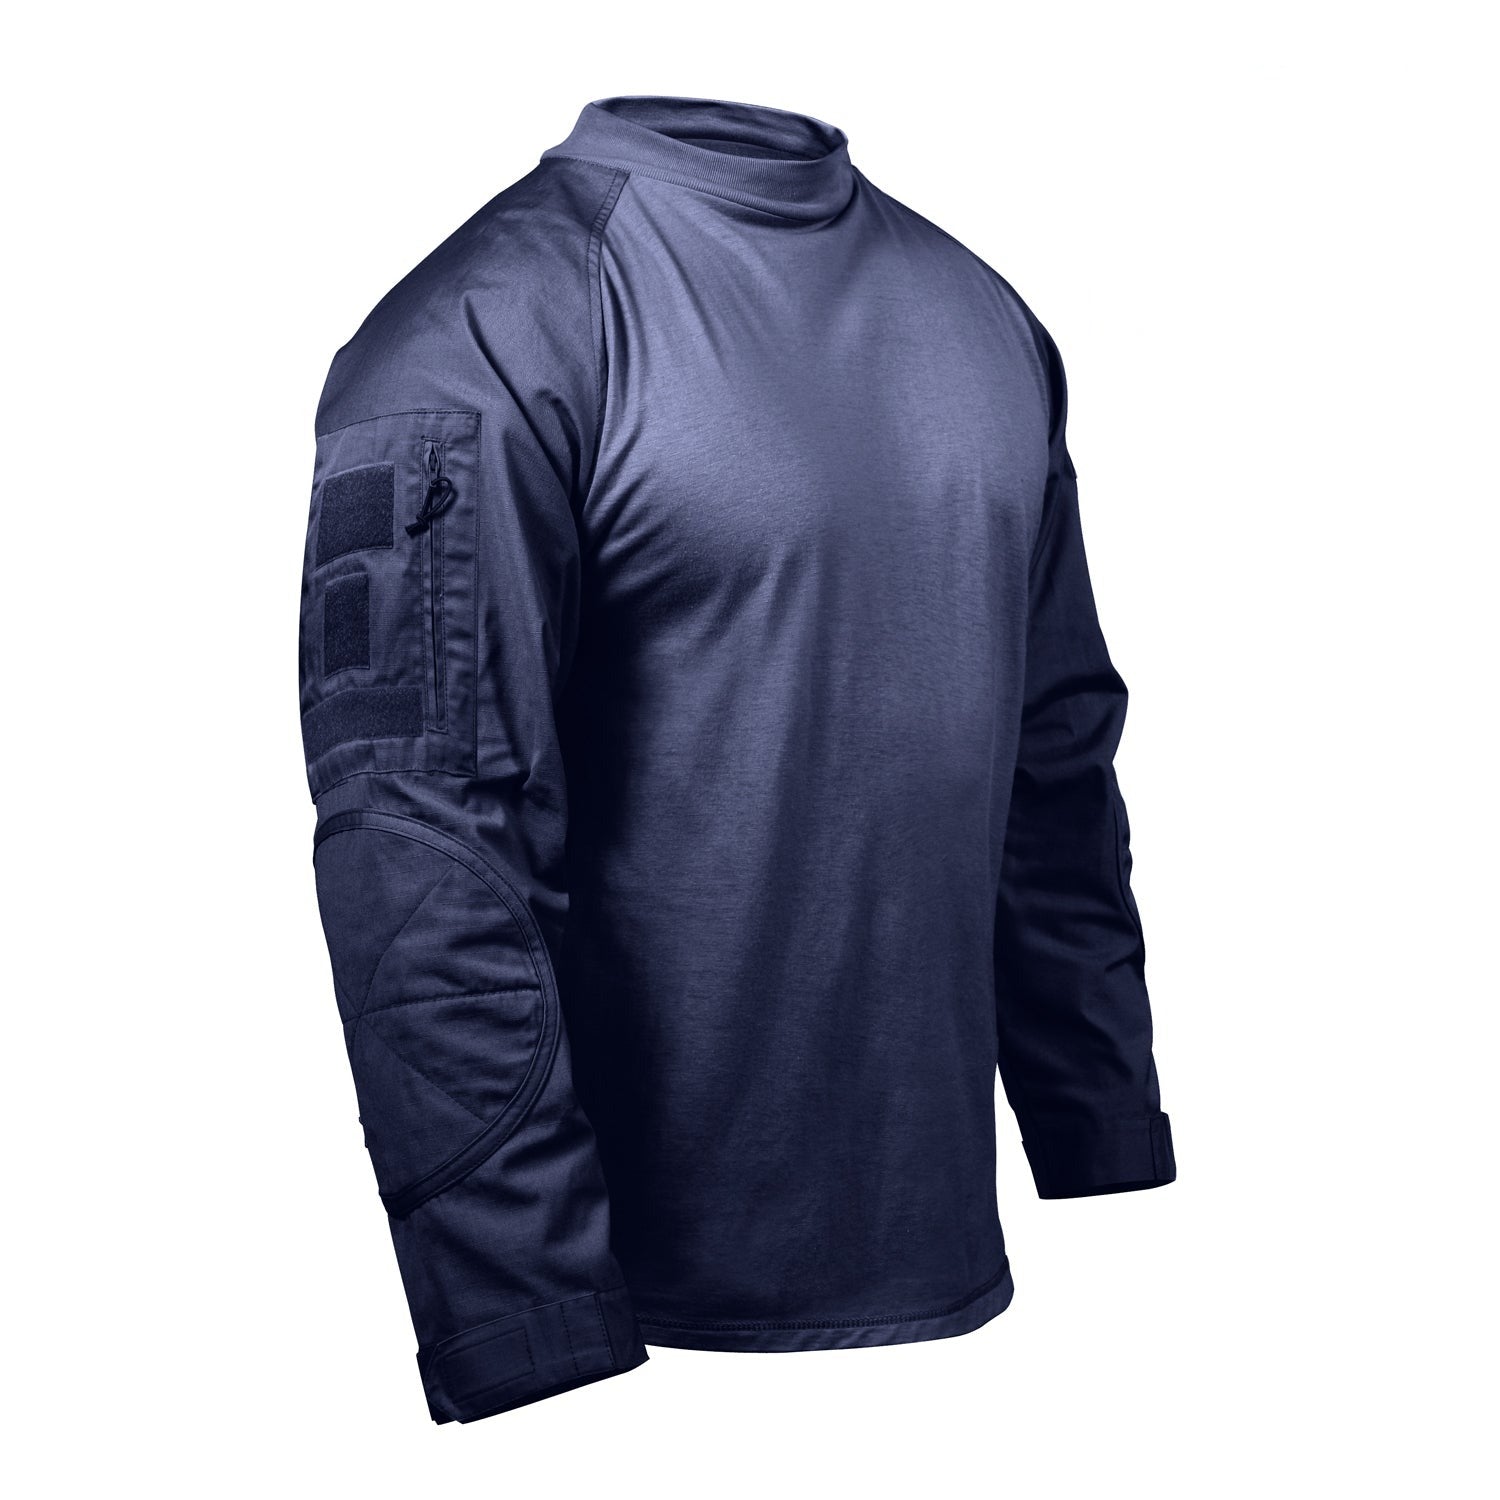 [Military][Fire Retardant] Acrylic/Cotton/Nylon/Cotton Combat Shirts Navy Blue